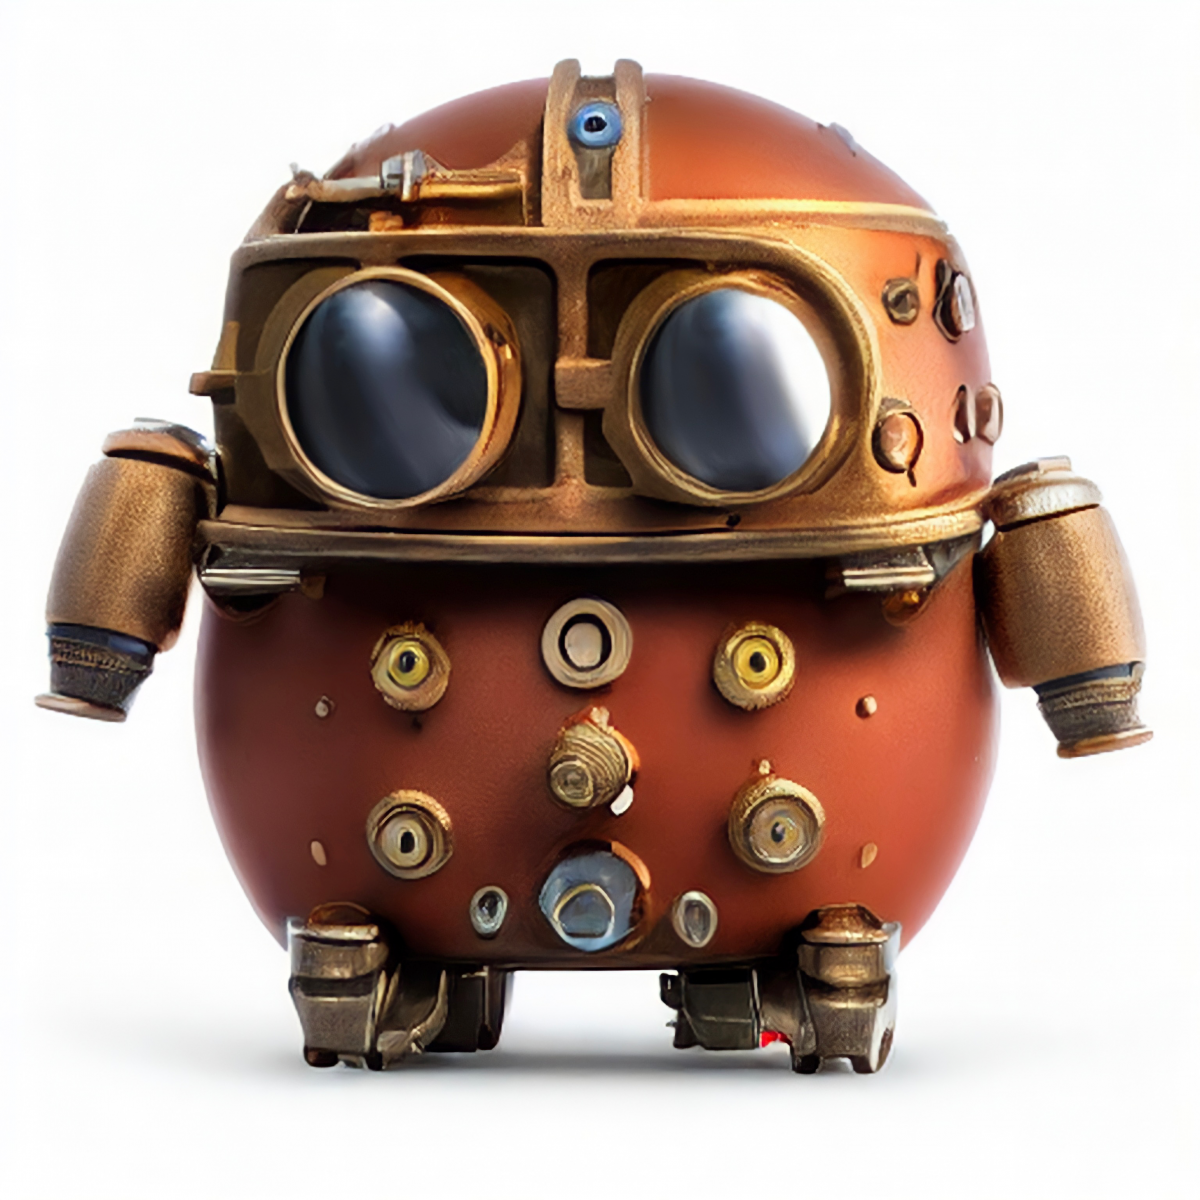 The roboticist and comedy writer Oddtoe's robot brand mascot